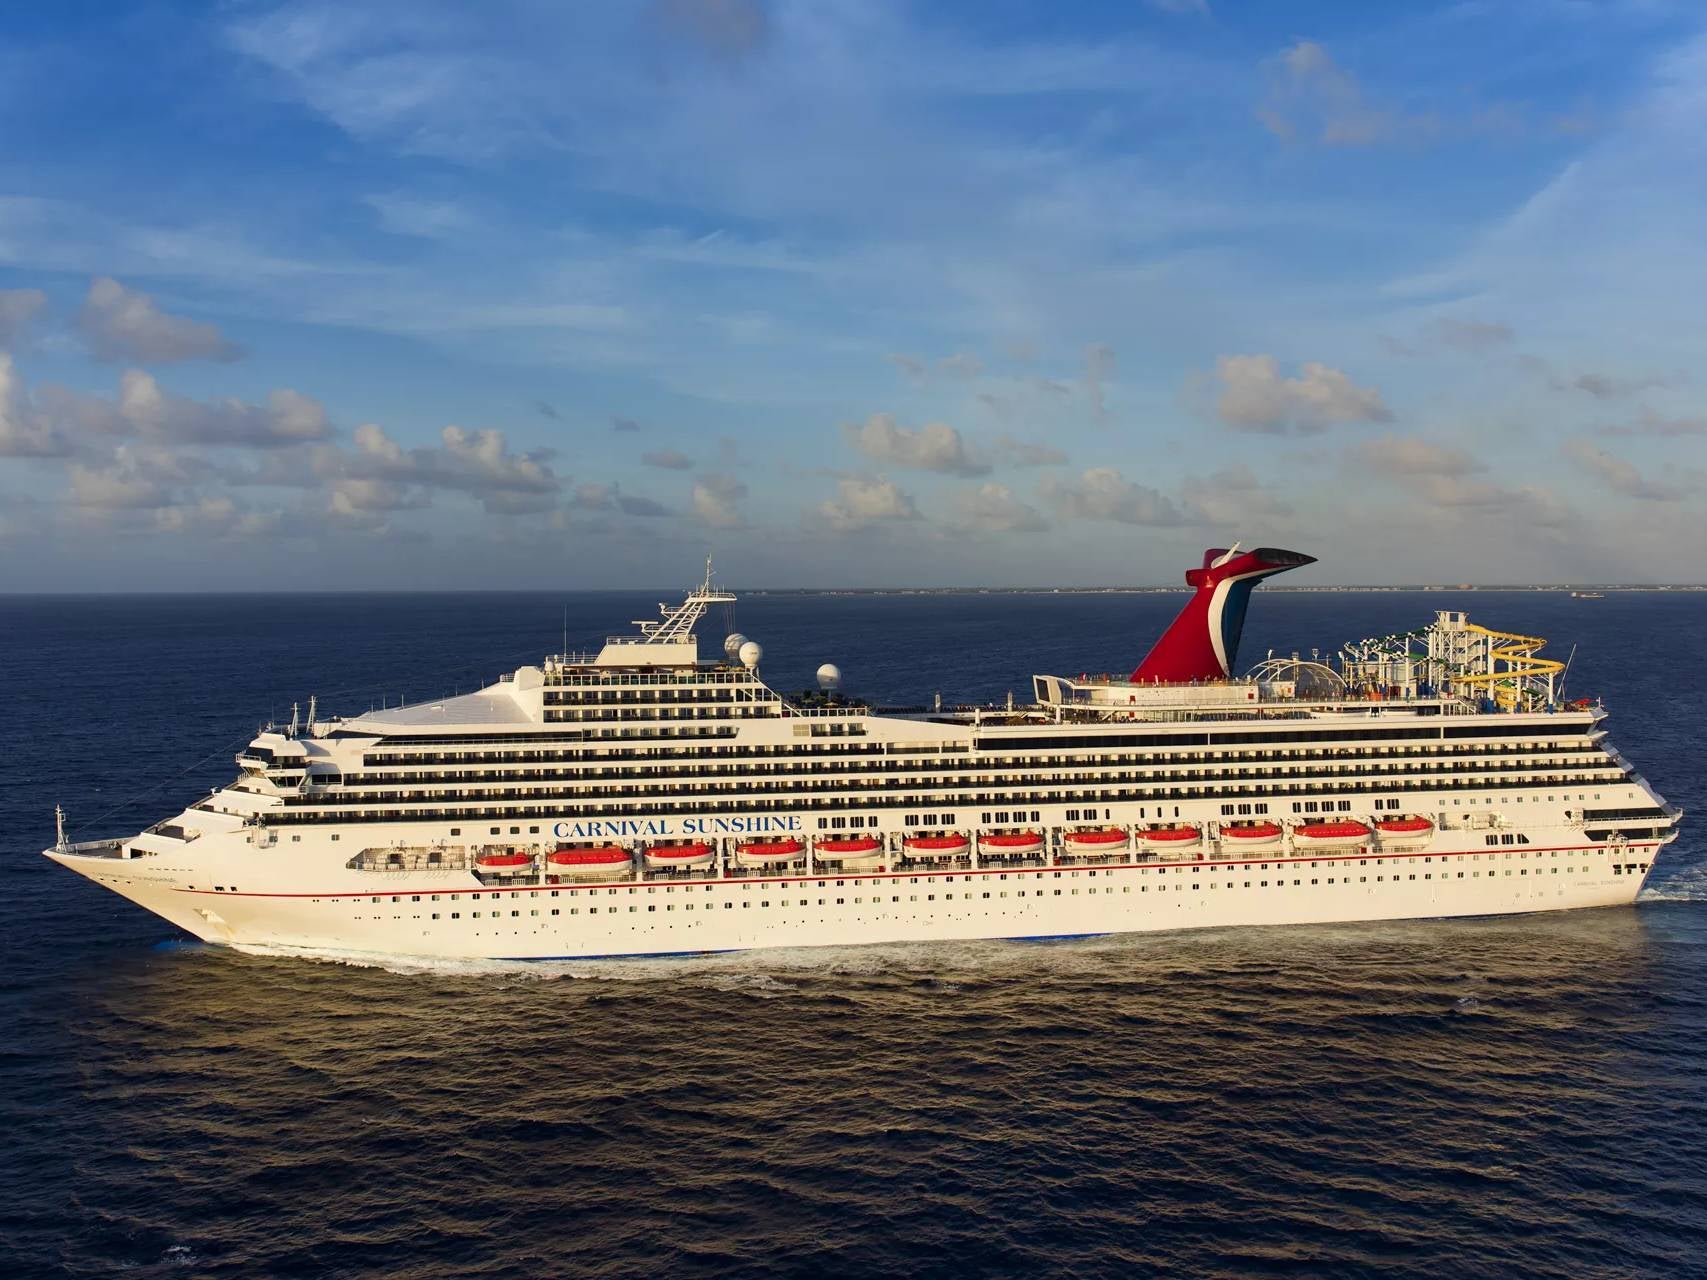 FBI investigating suspicious death of passenger onboard Carnival cruise